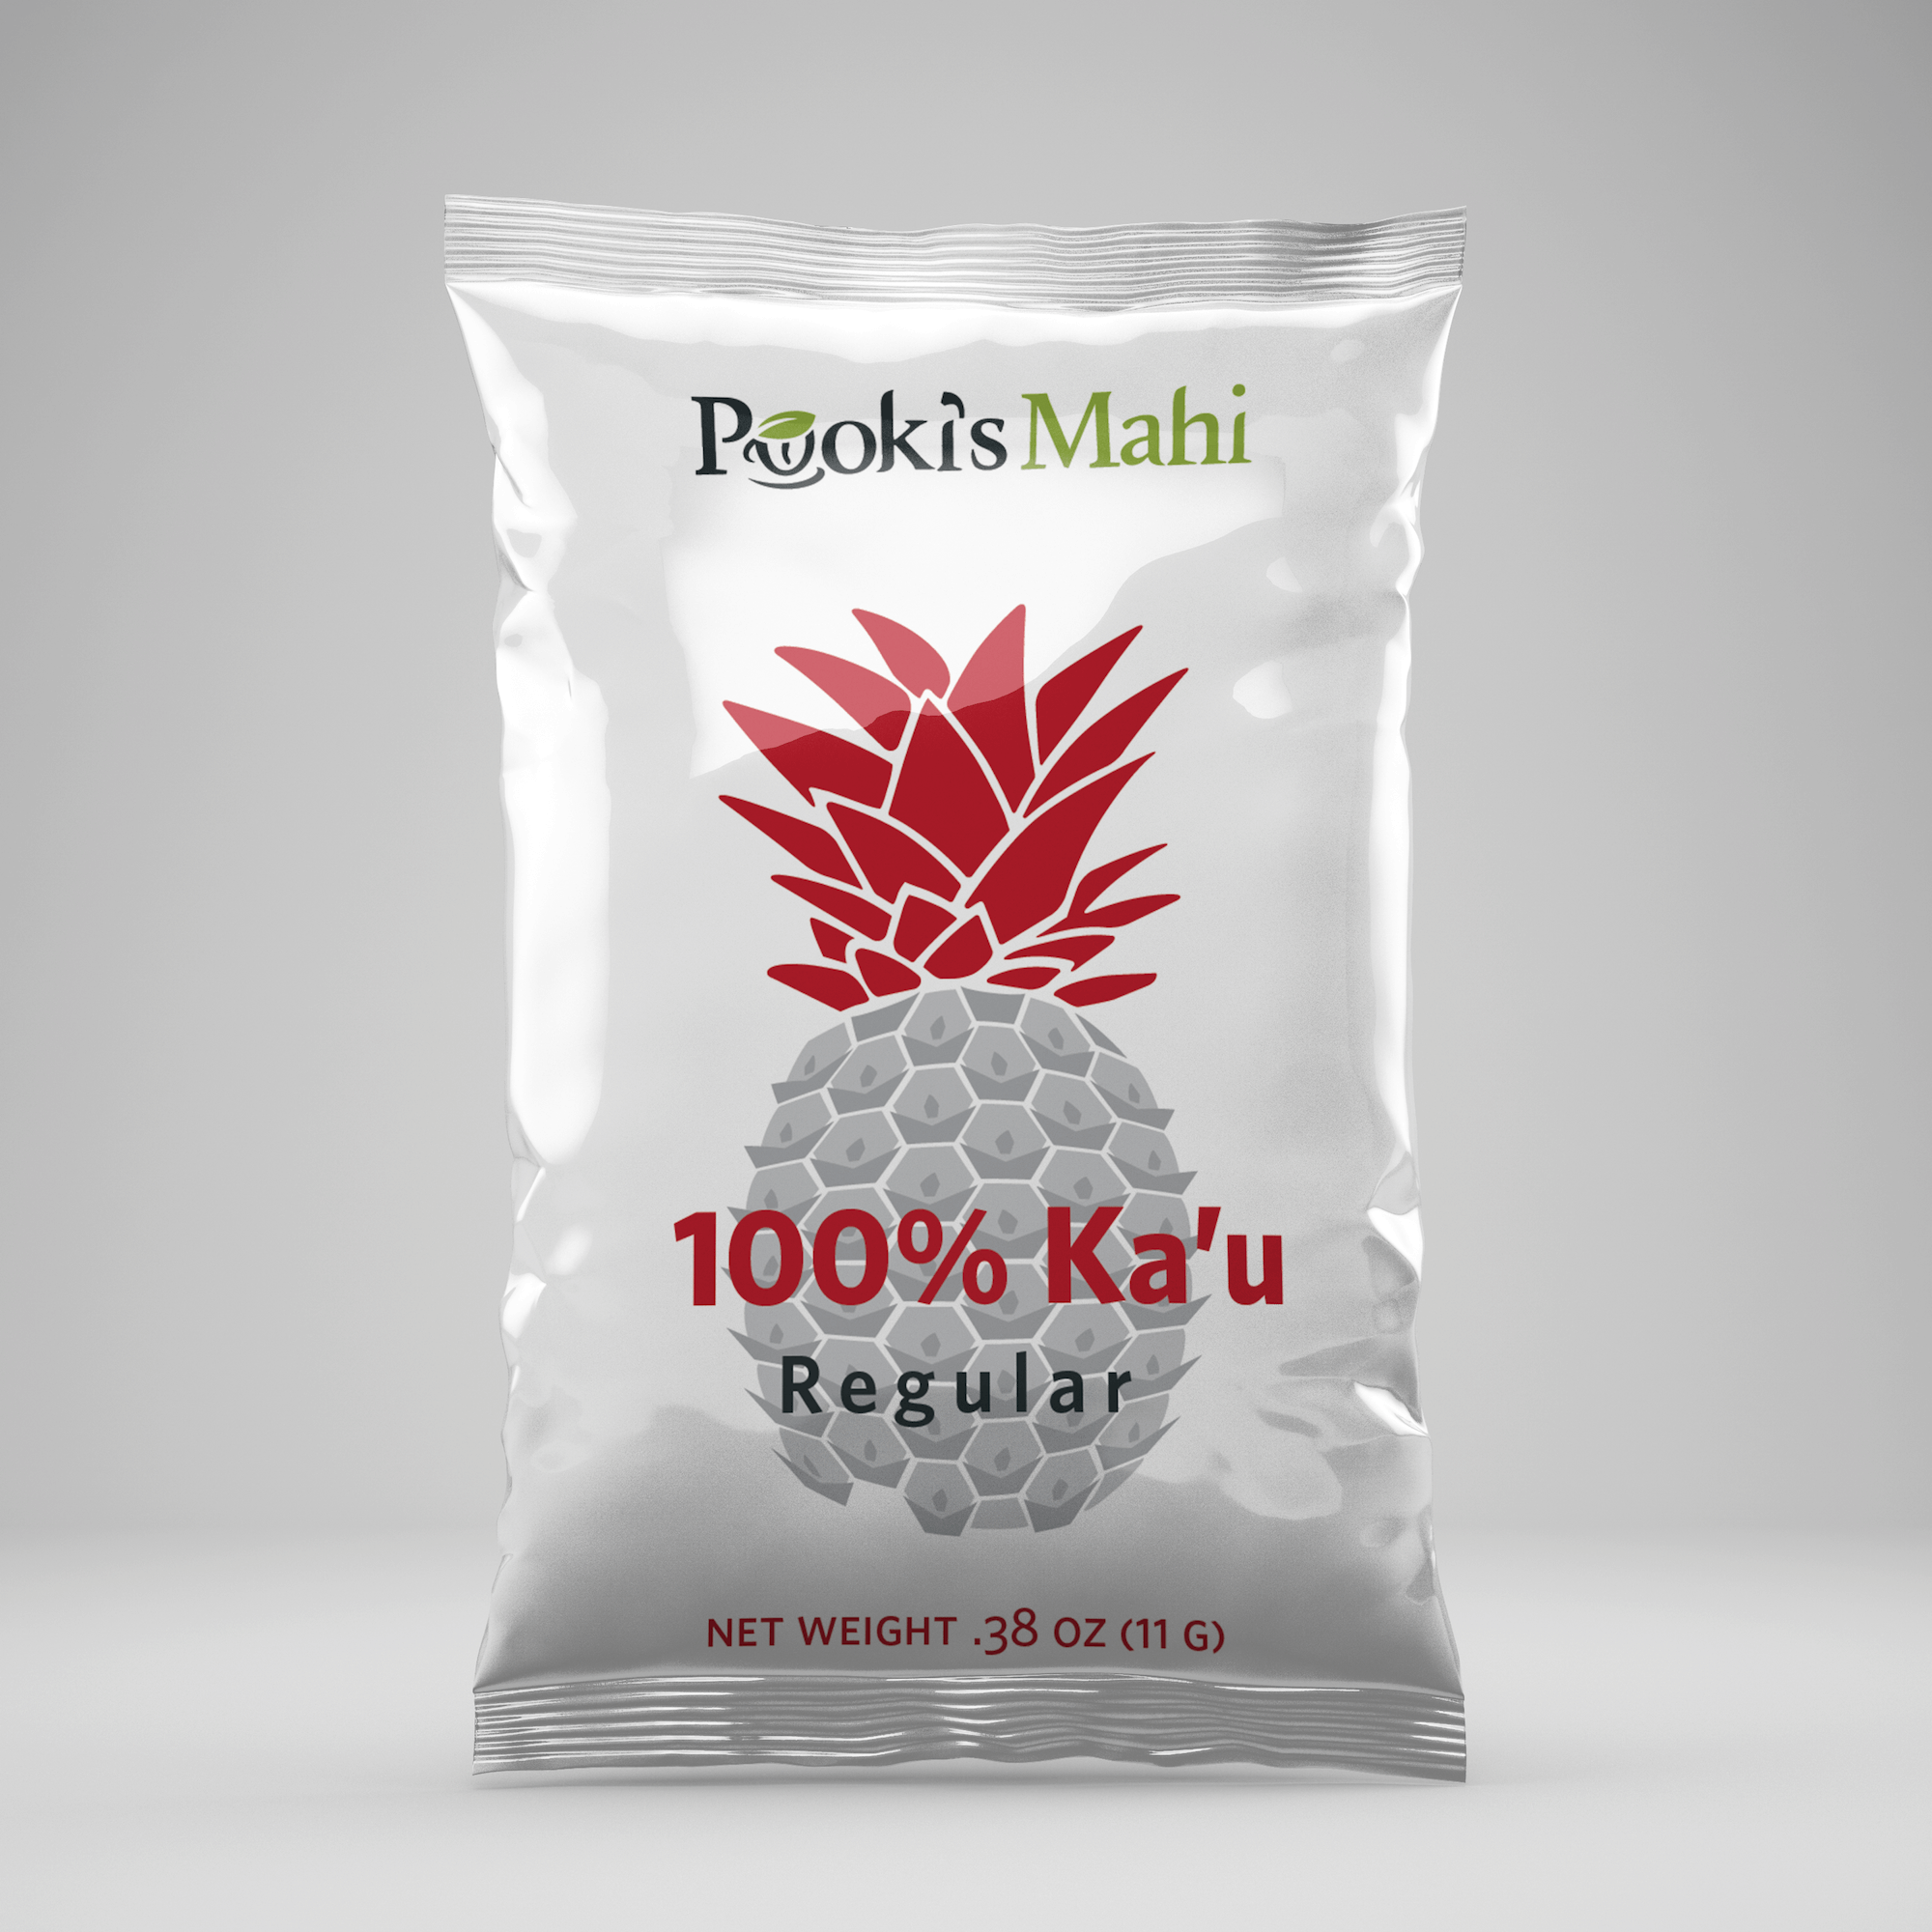 Fuel your day with Pooki’s Mahi’s 100% Kau coffee pods